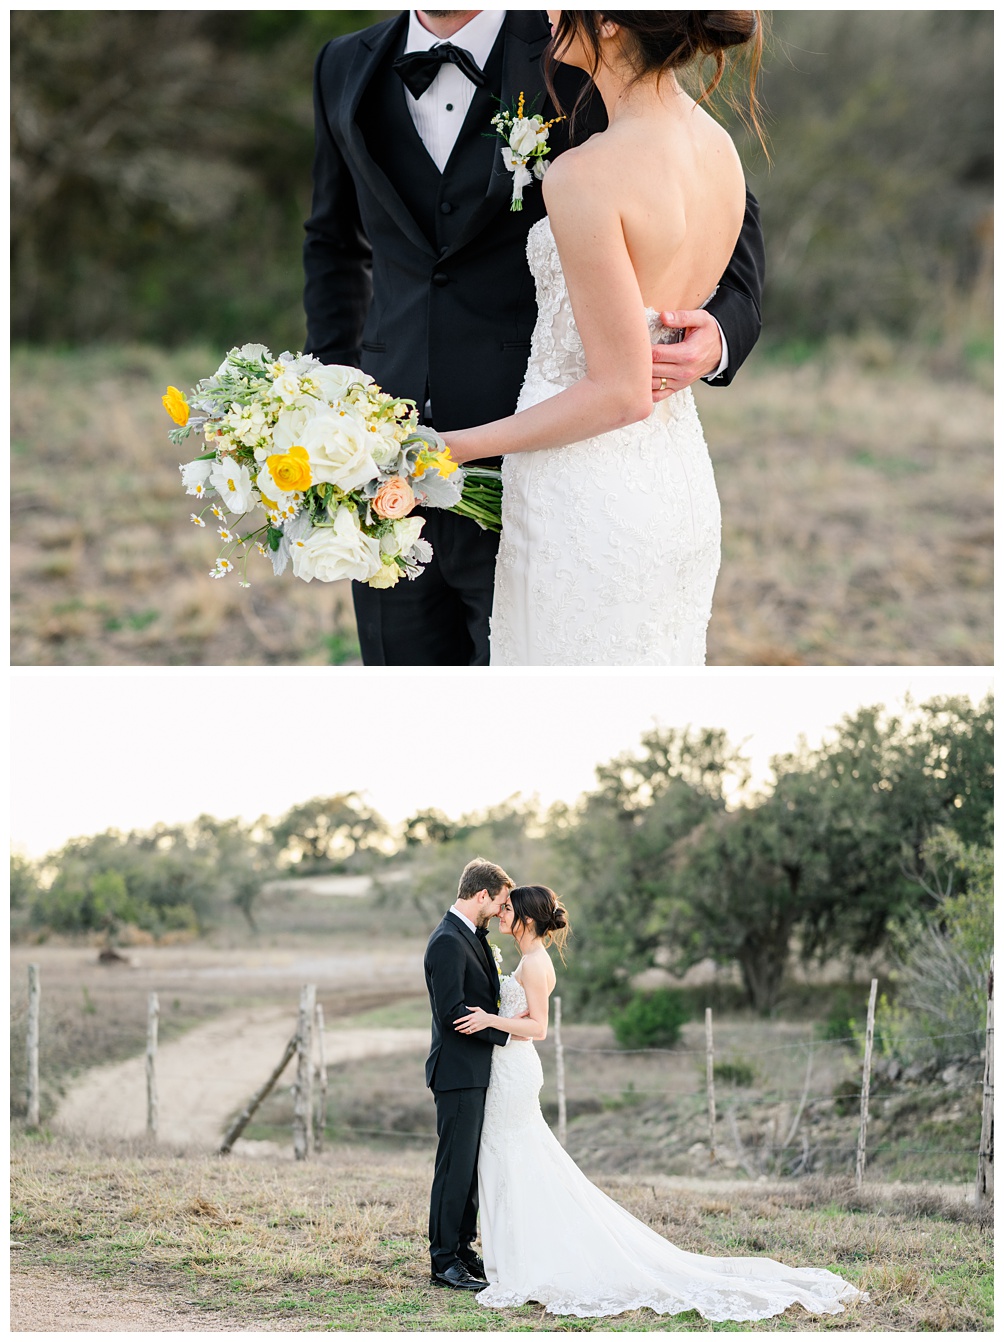 Ranch wedding venue within Austin City Limits